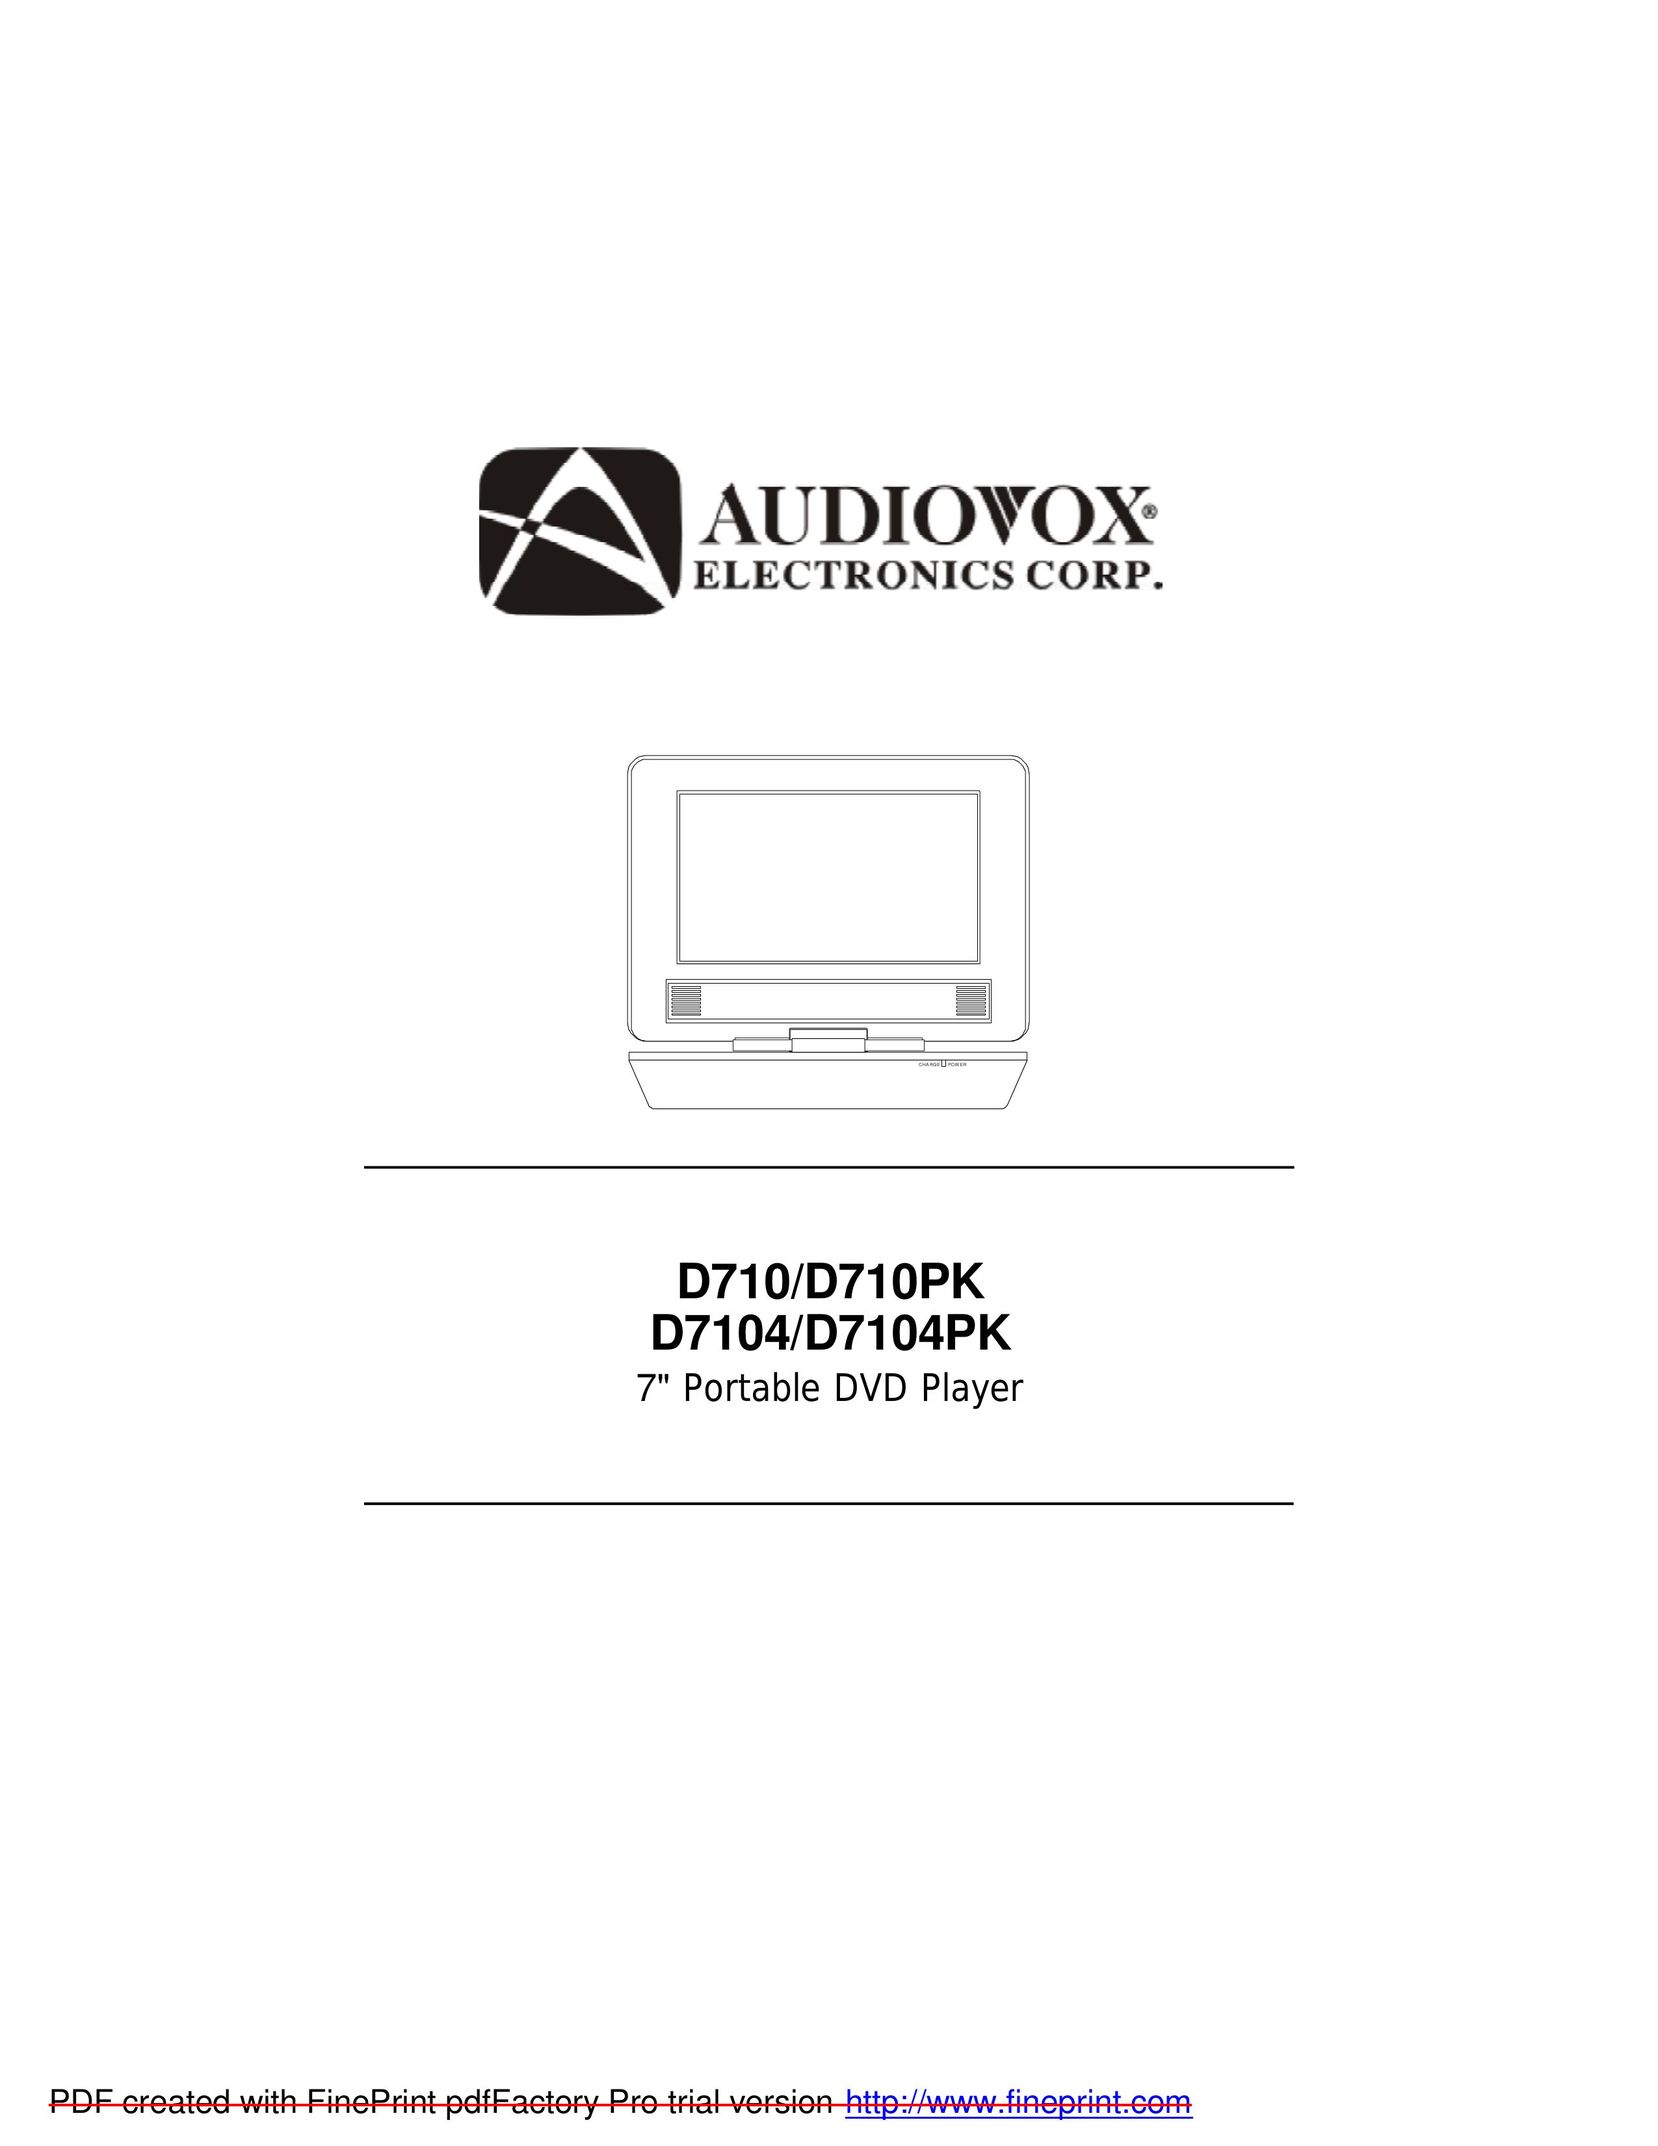 Audiovox D710PK Portable DVD Player User Manual